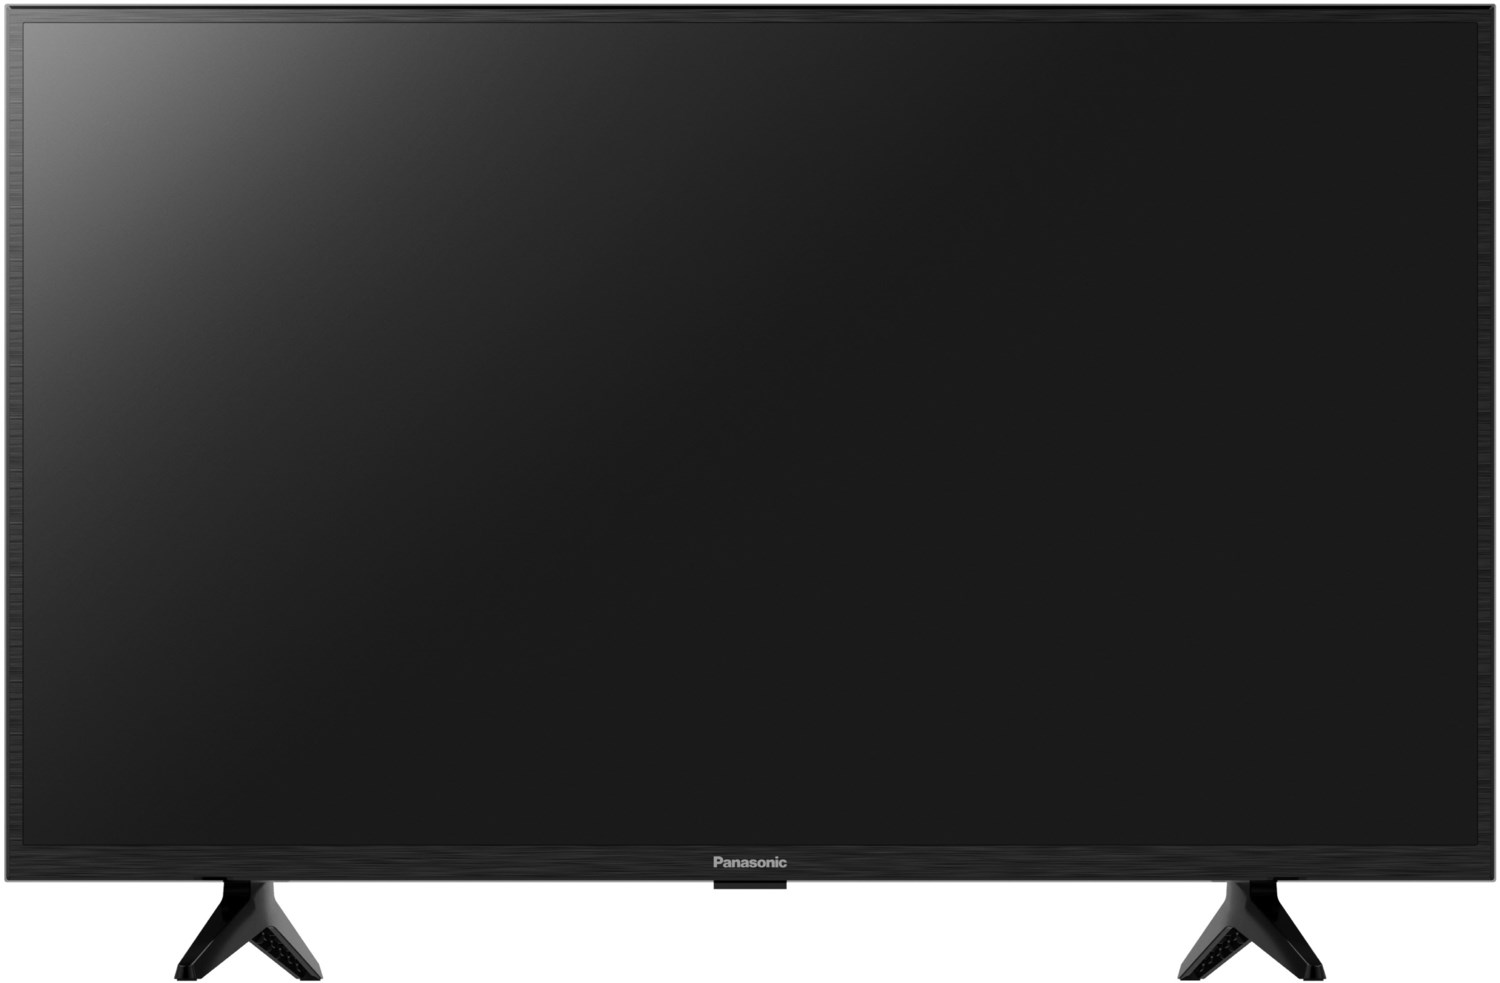 Panasonic 32 Zoll (80 cm) HD Smart TV schwarz